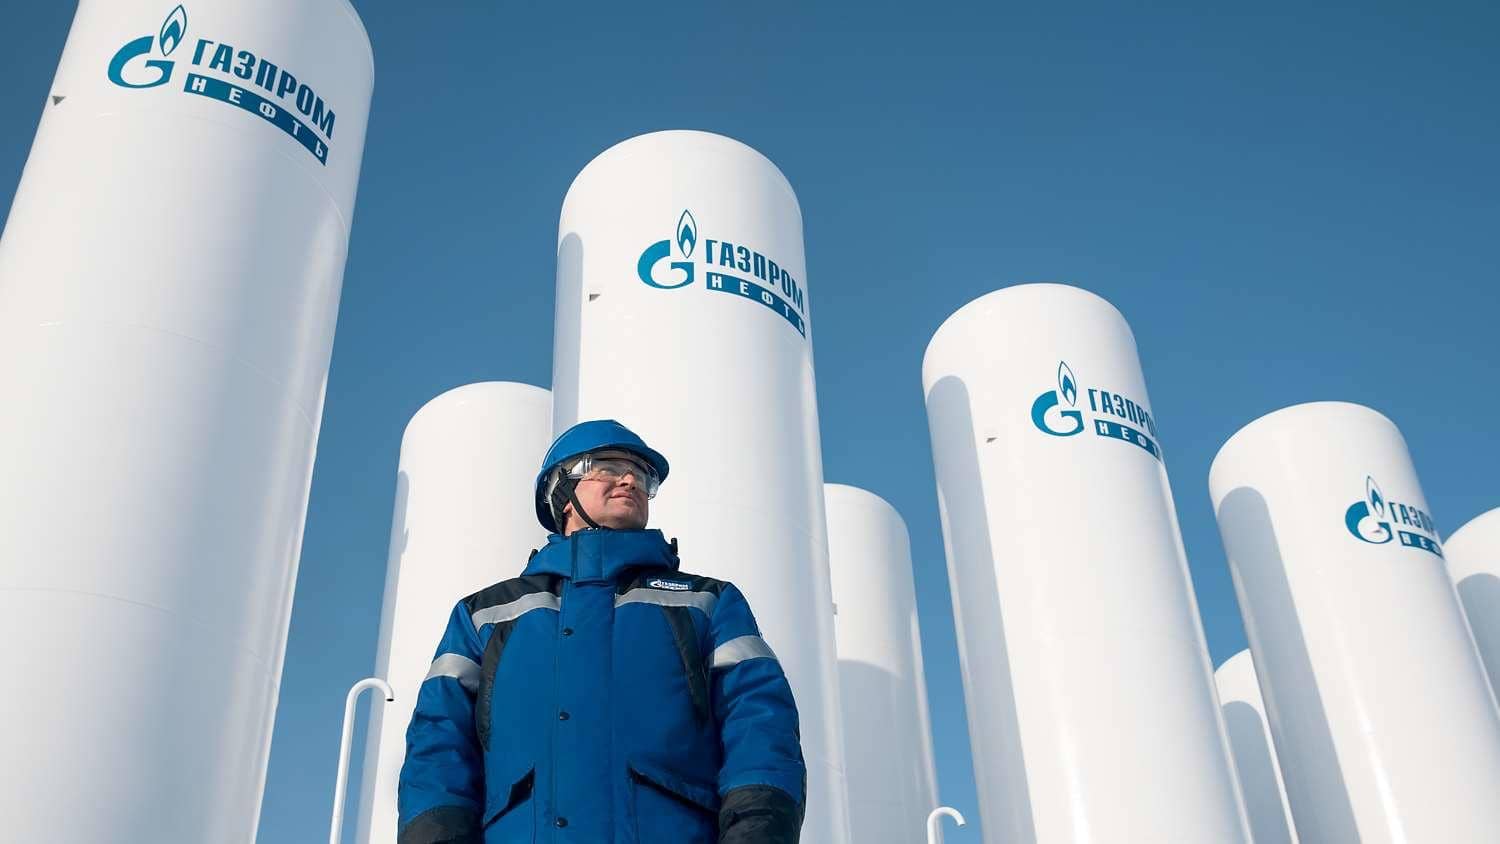 Поставки “Газпрома” в январе достигли рекорда